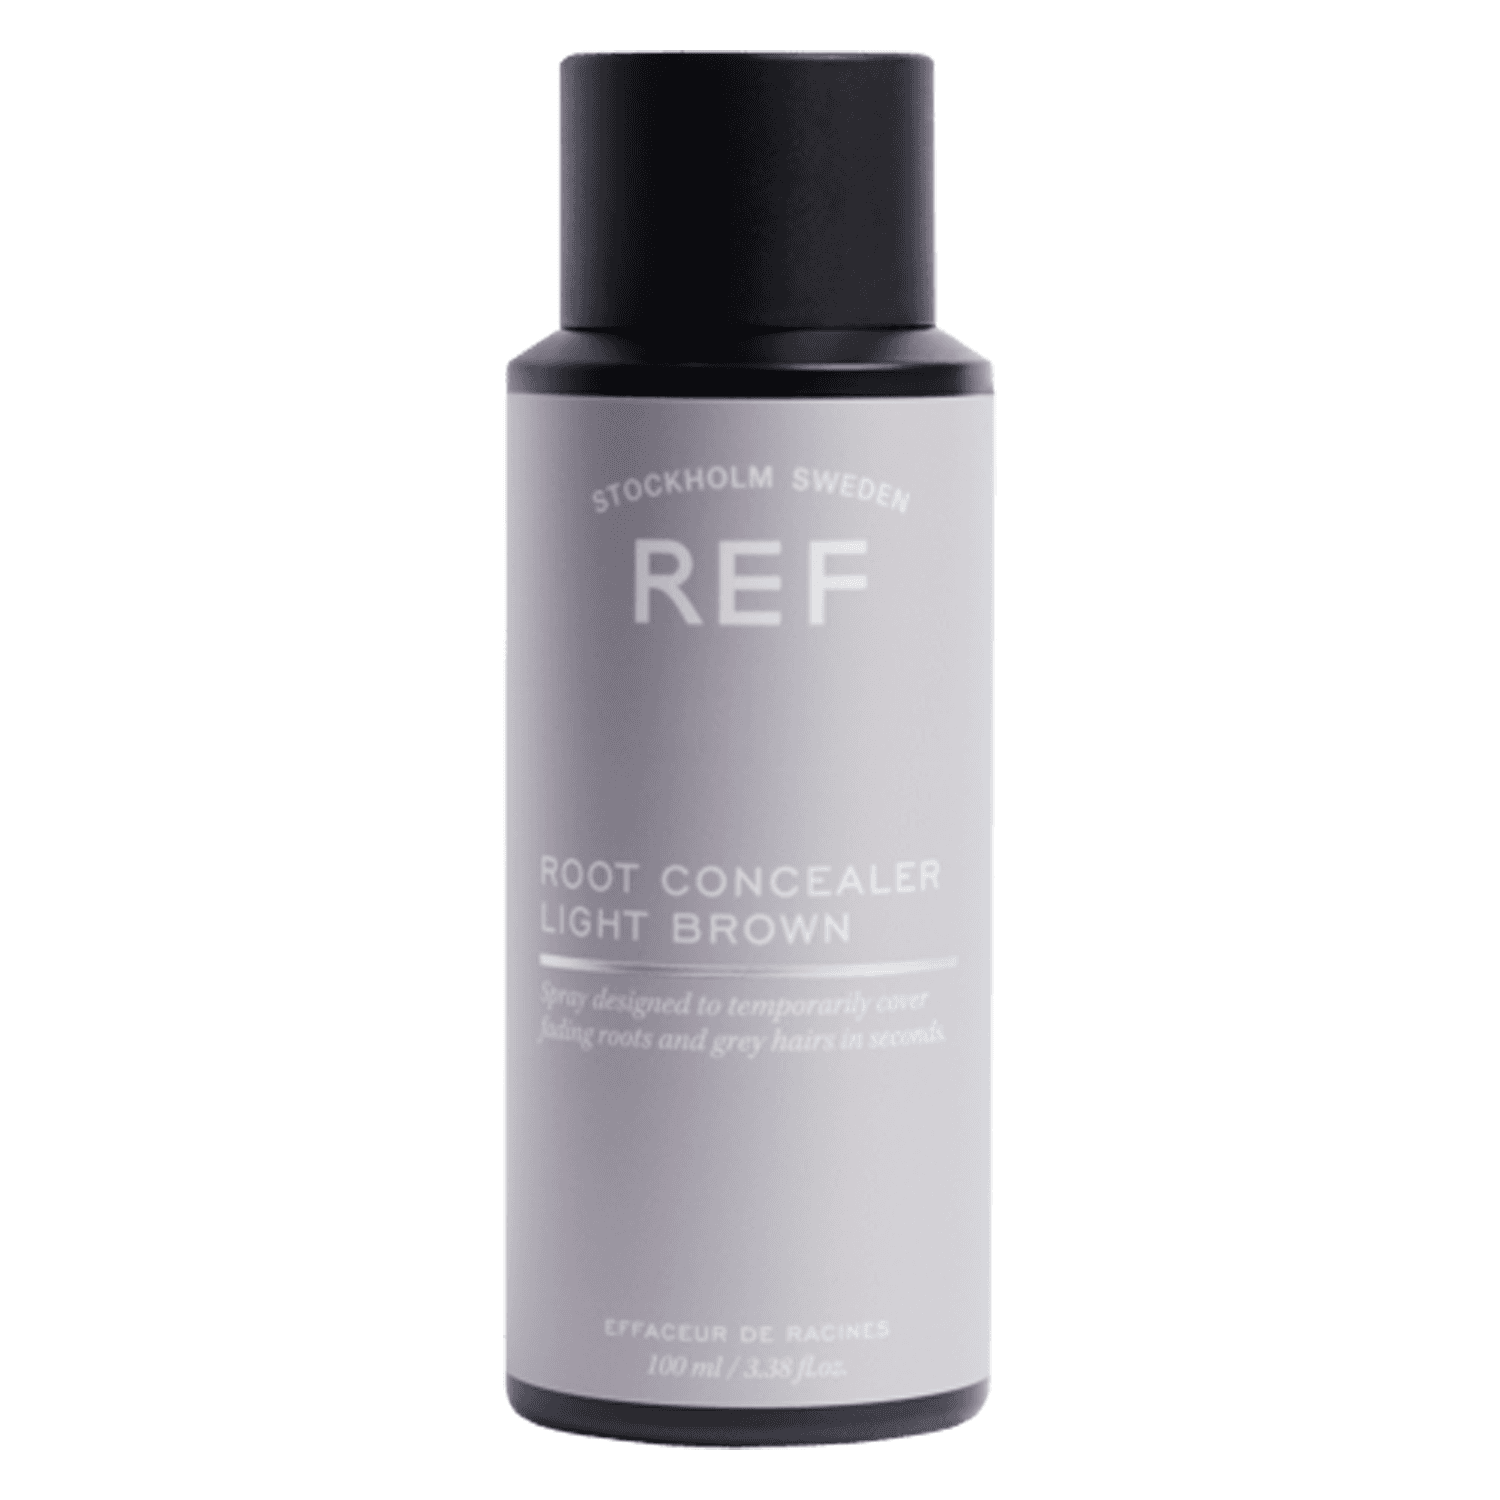 REF Styling - Root Concealer Light Brown